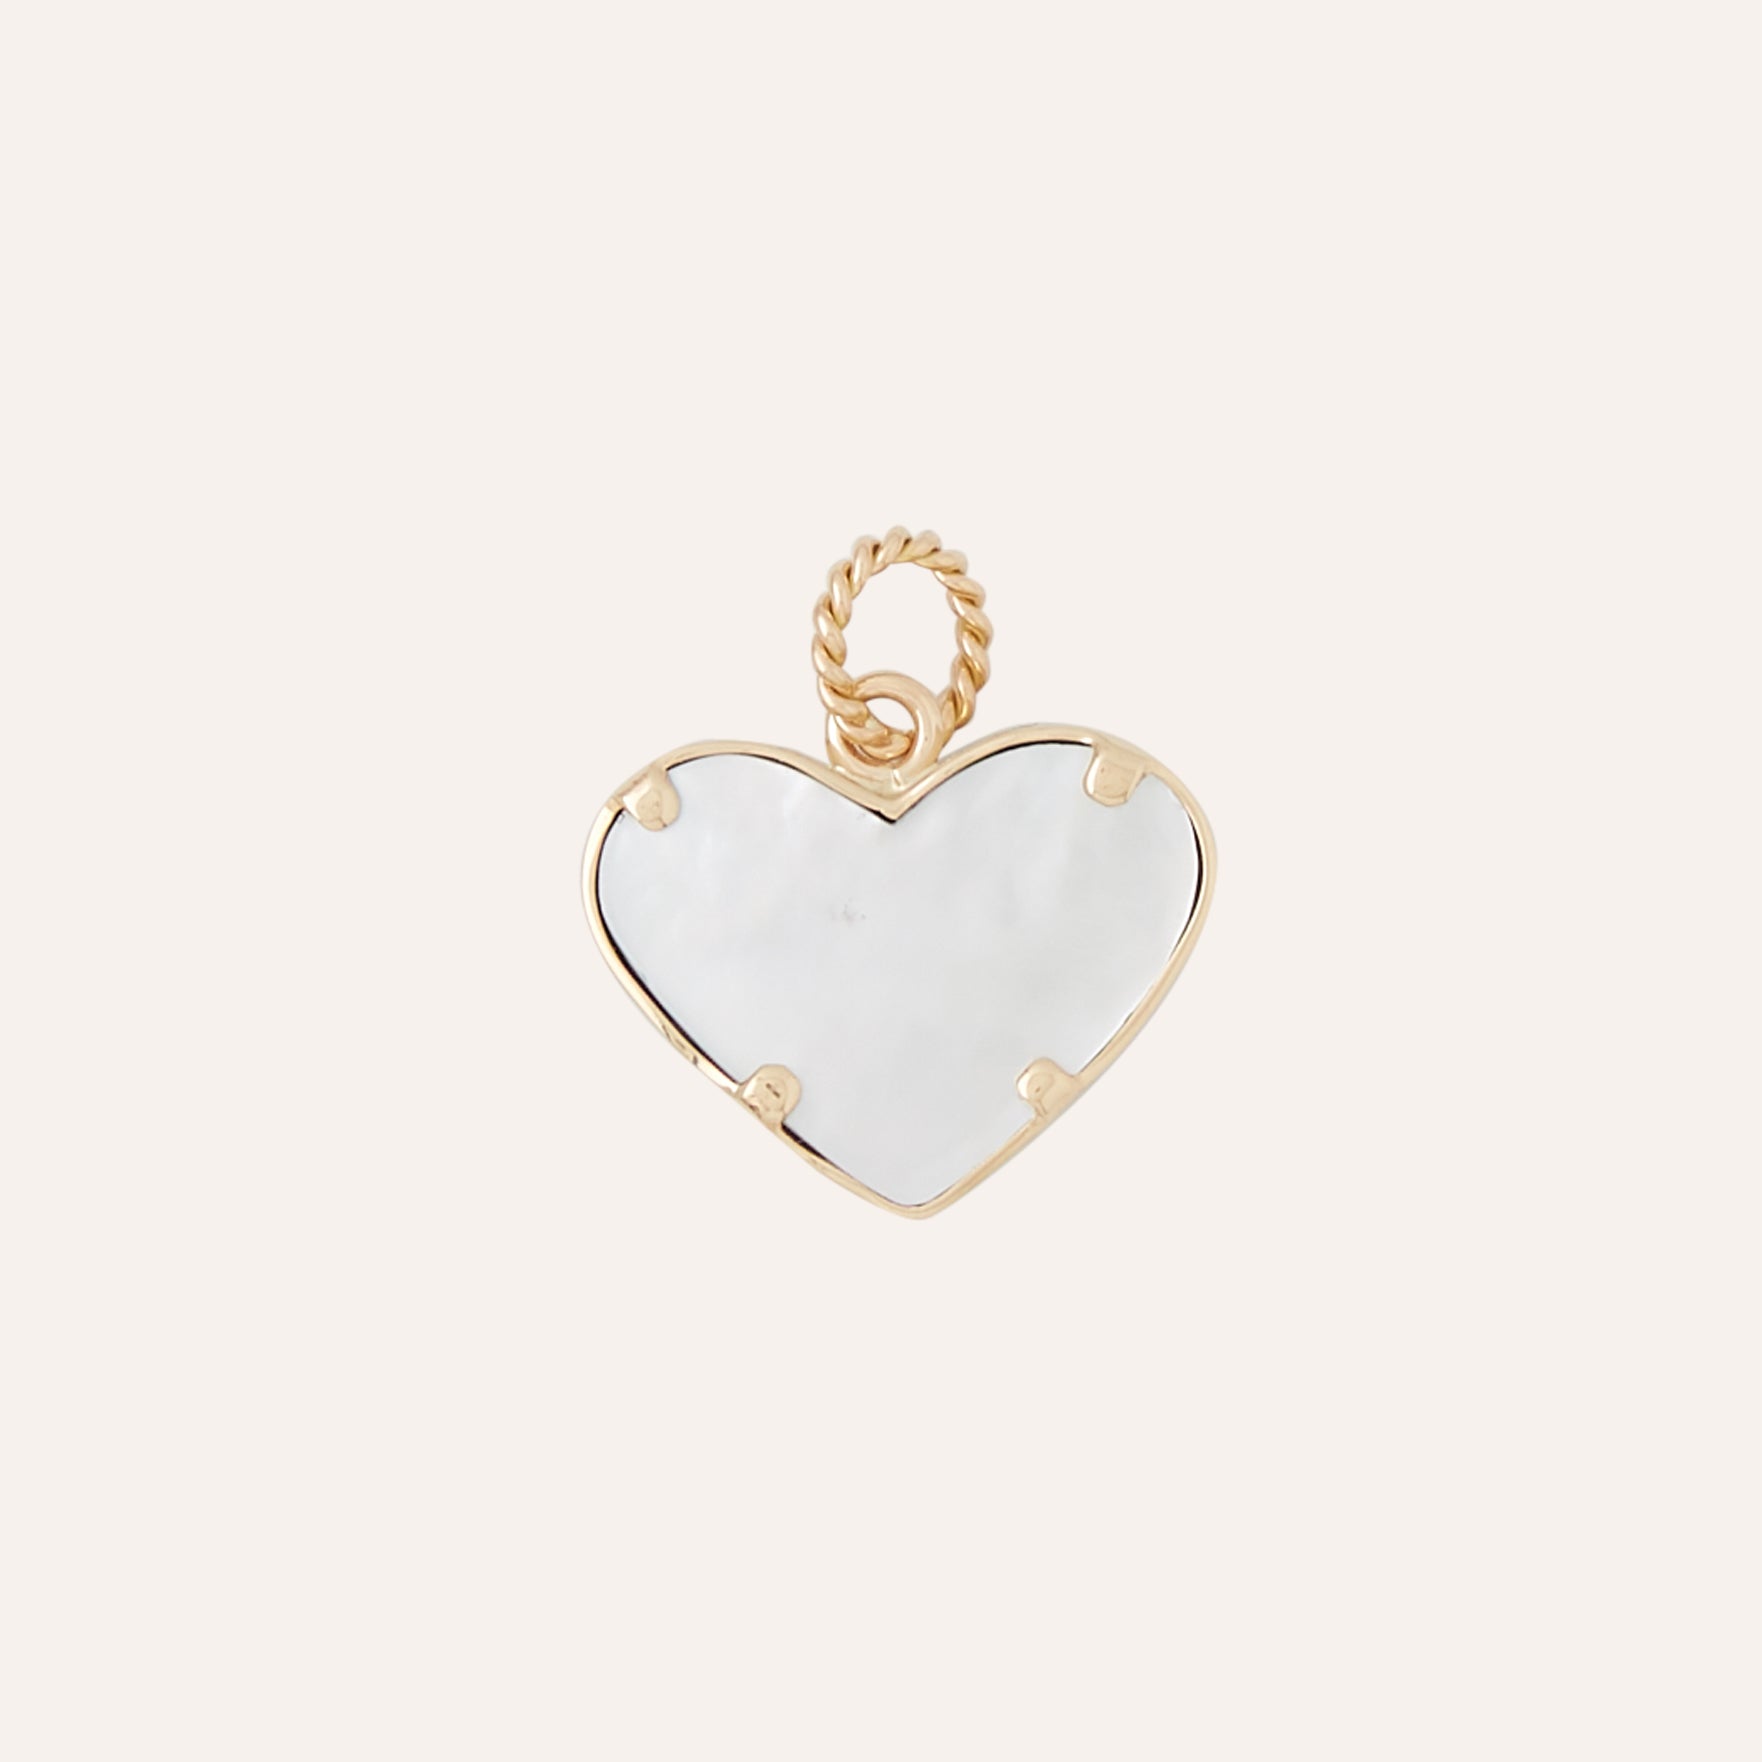 Medium Kingman Turquoise Heart 19mm Charm